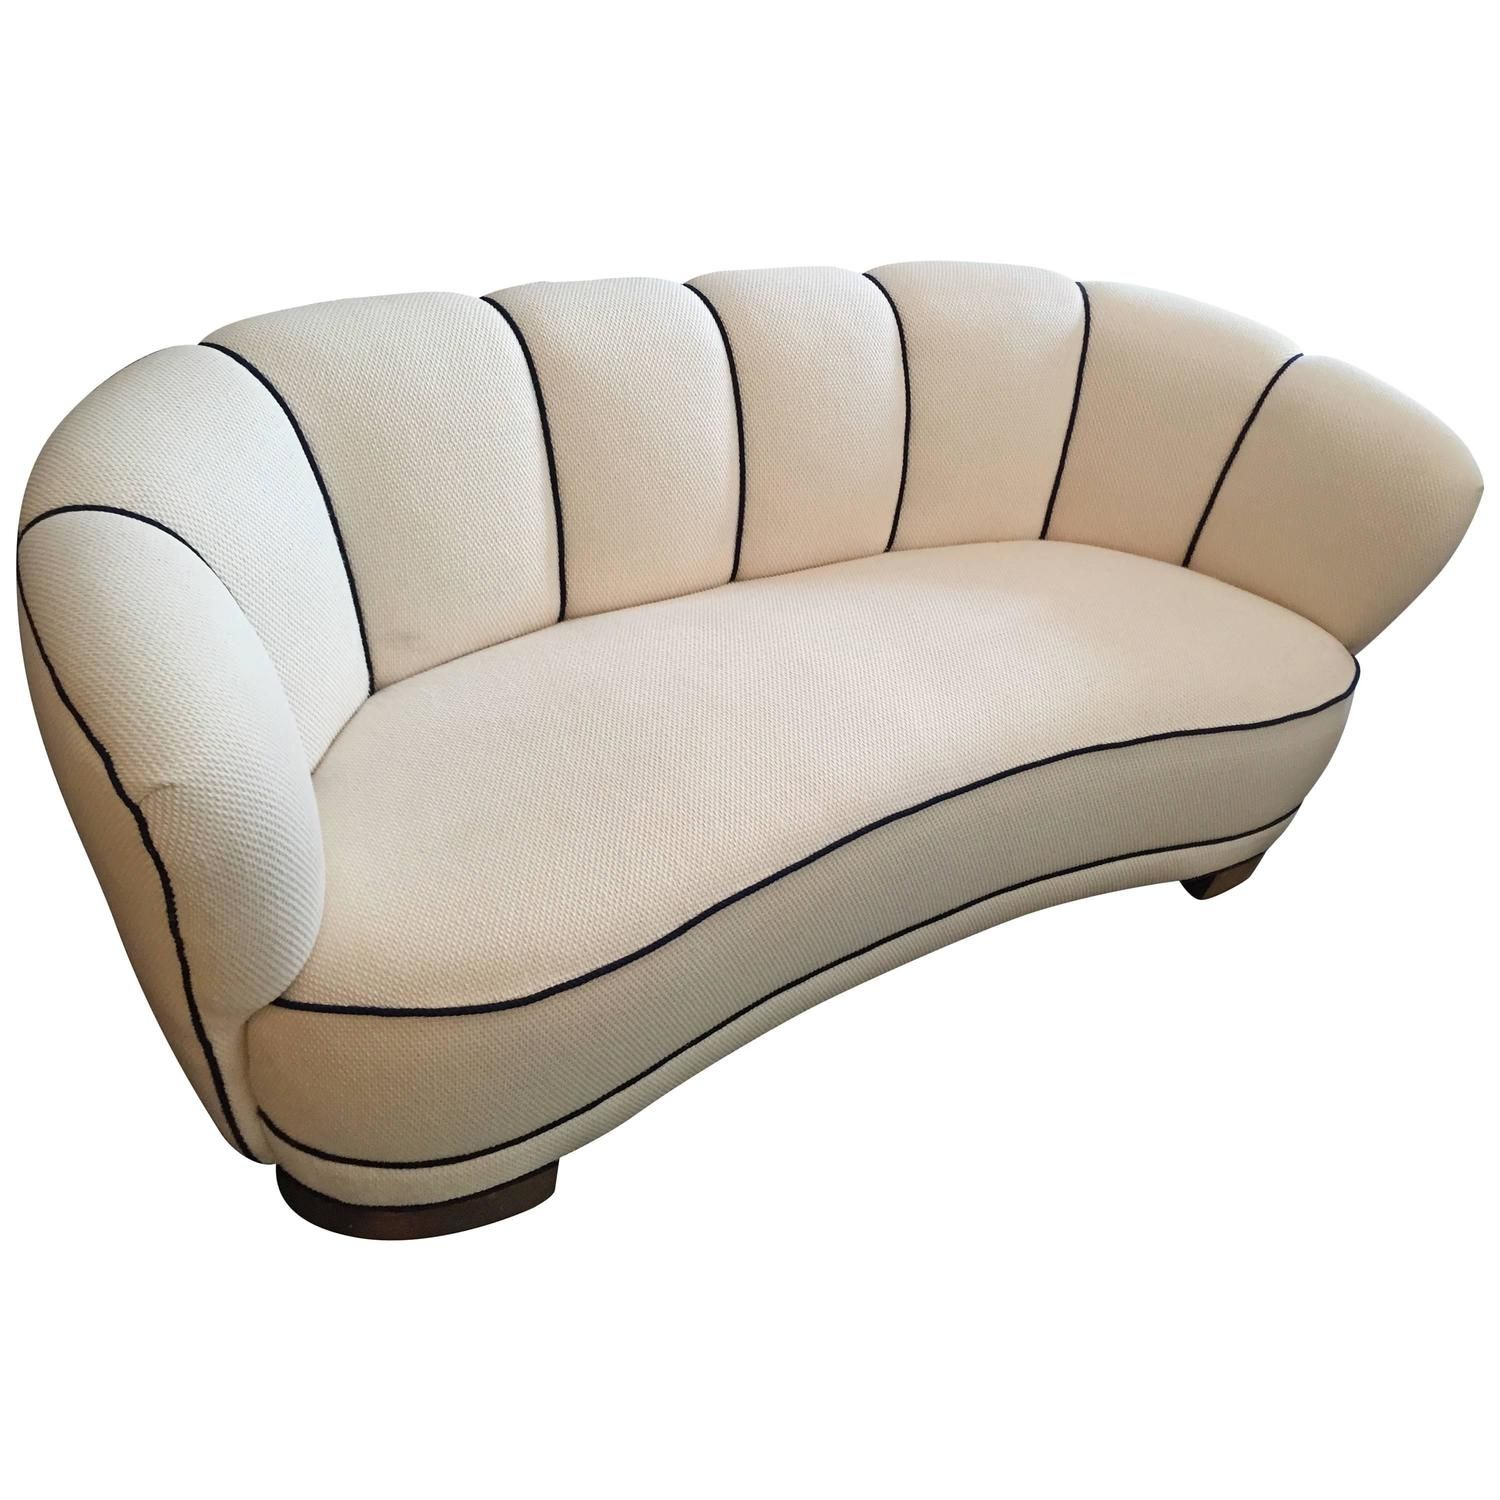 Amazing Art Deco Sofa 66 On Sofa Design Ideas With Art Deco Sofa Intended For Art Deco Sofas (Photo 1 of 10)